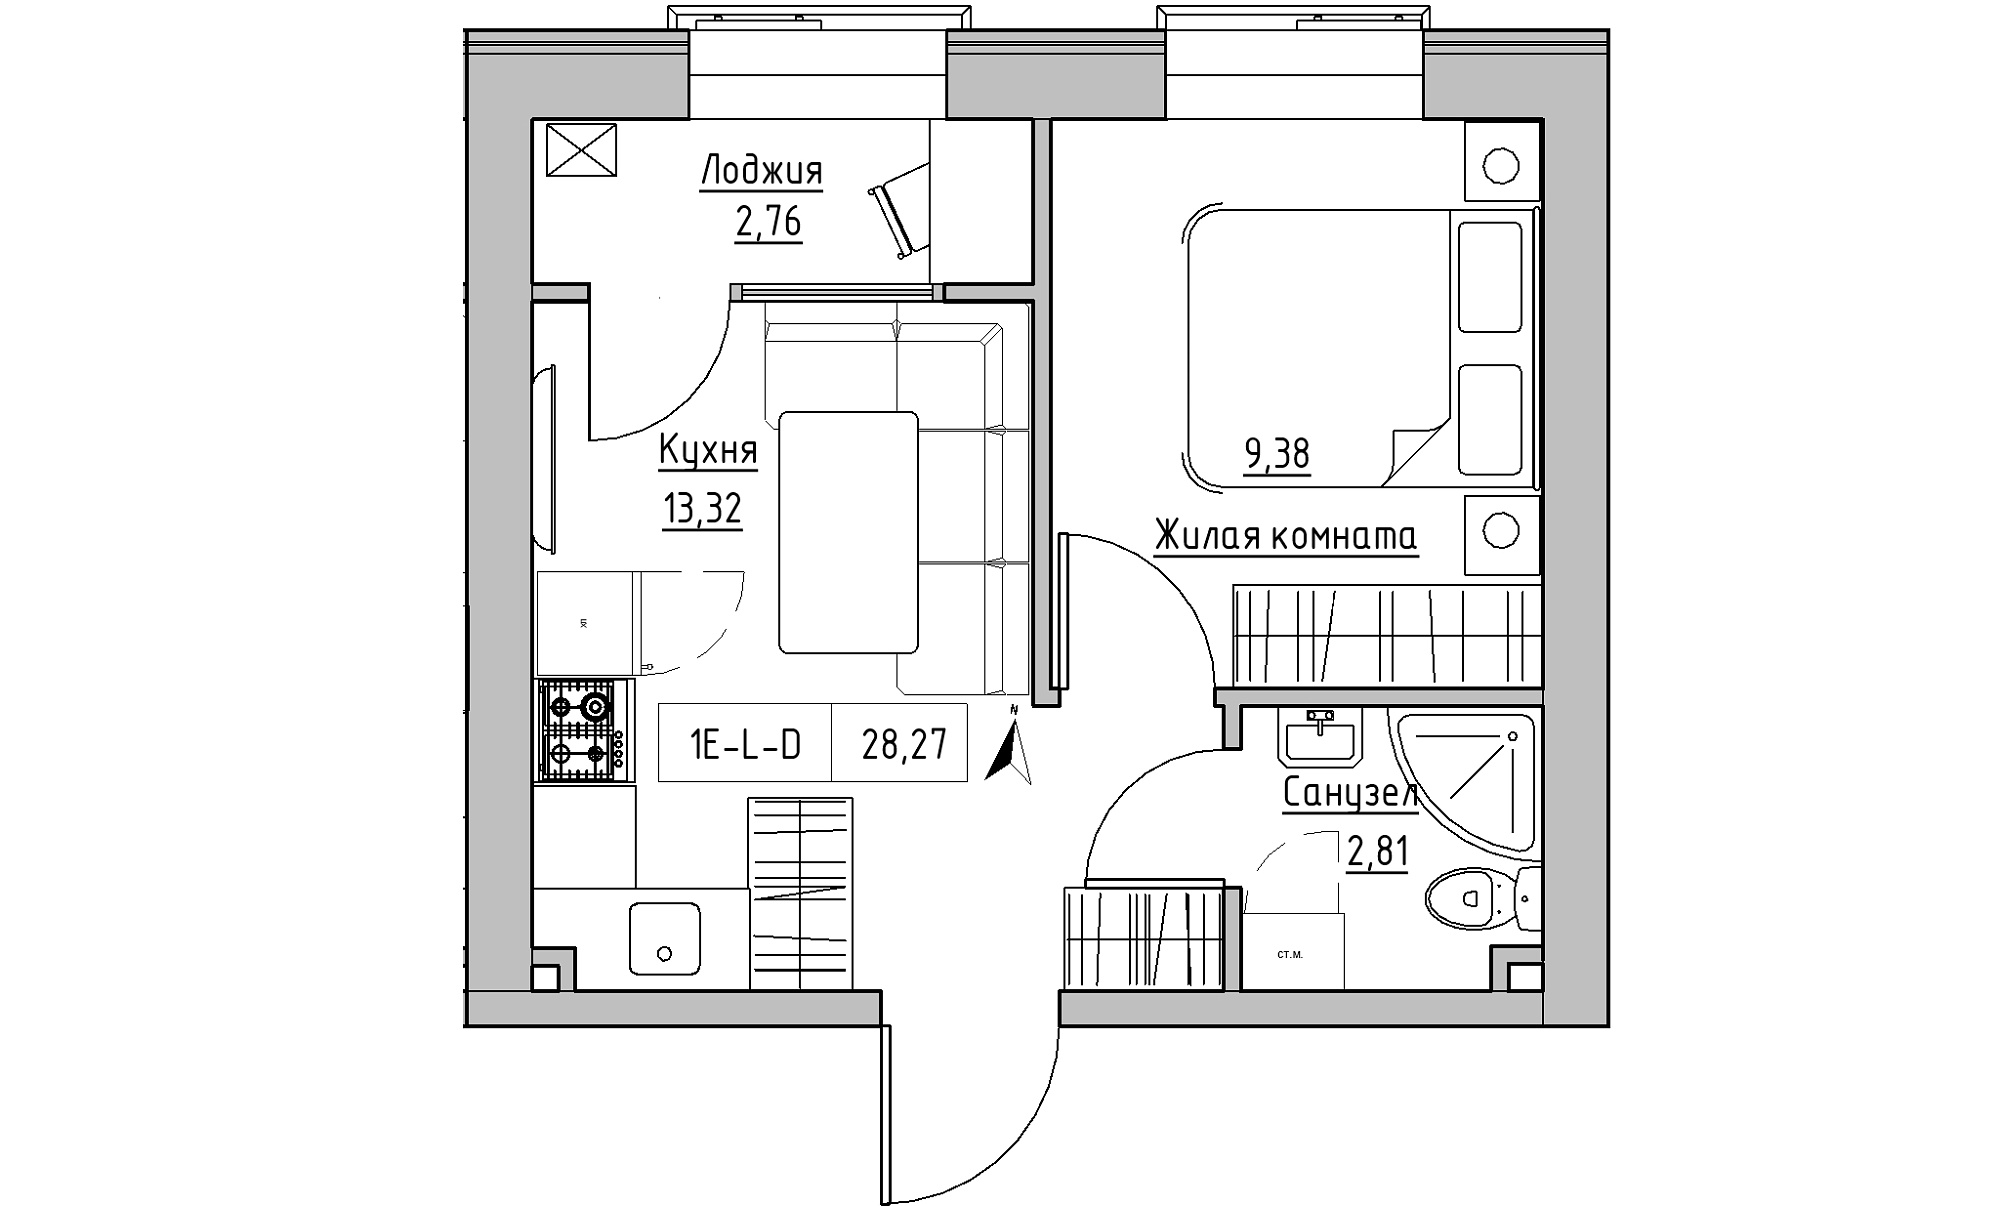 Planning 1-rm flats area 28.27m2, KS-023-03/0017.